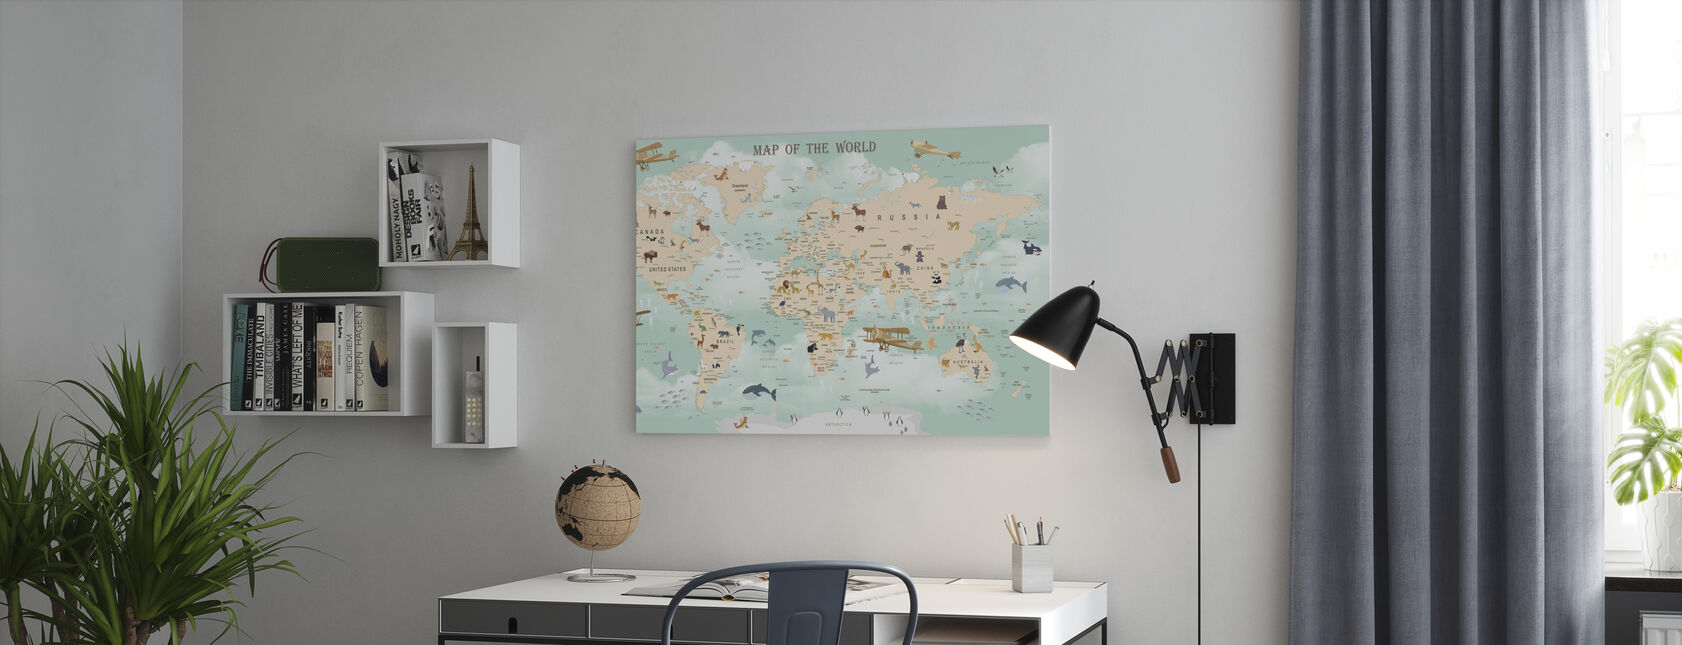 Wildlife World Map - Canvas print - Office